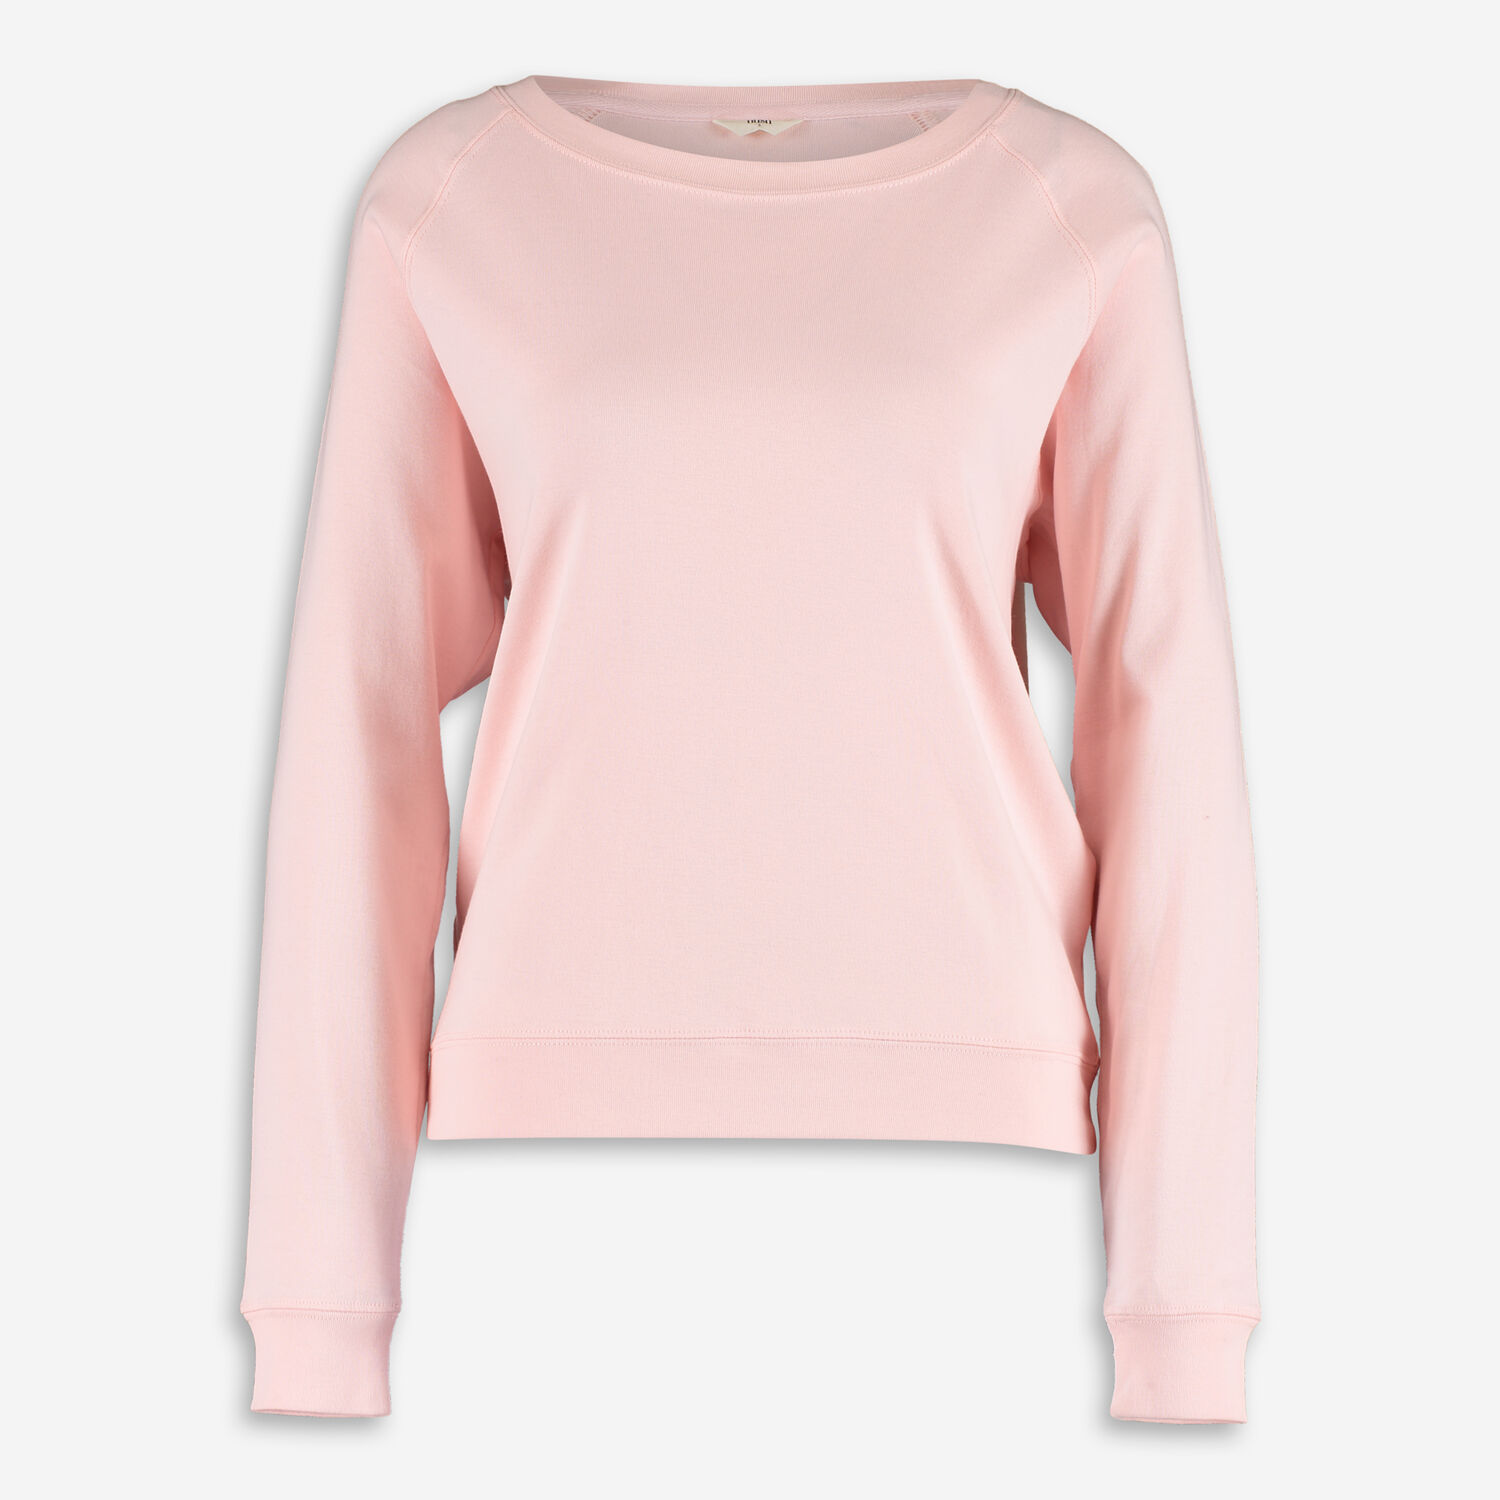 UK Maxx Long TK - T Pink Sleeve Shirt